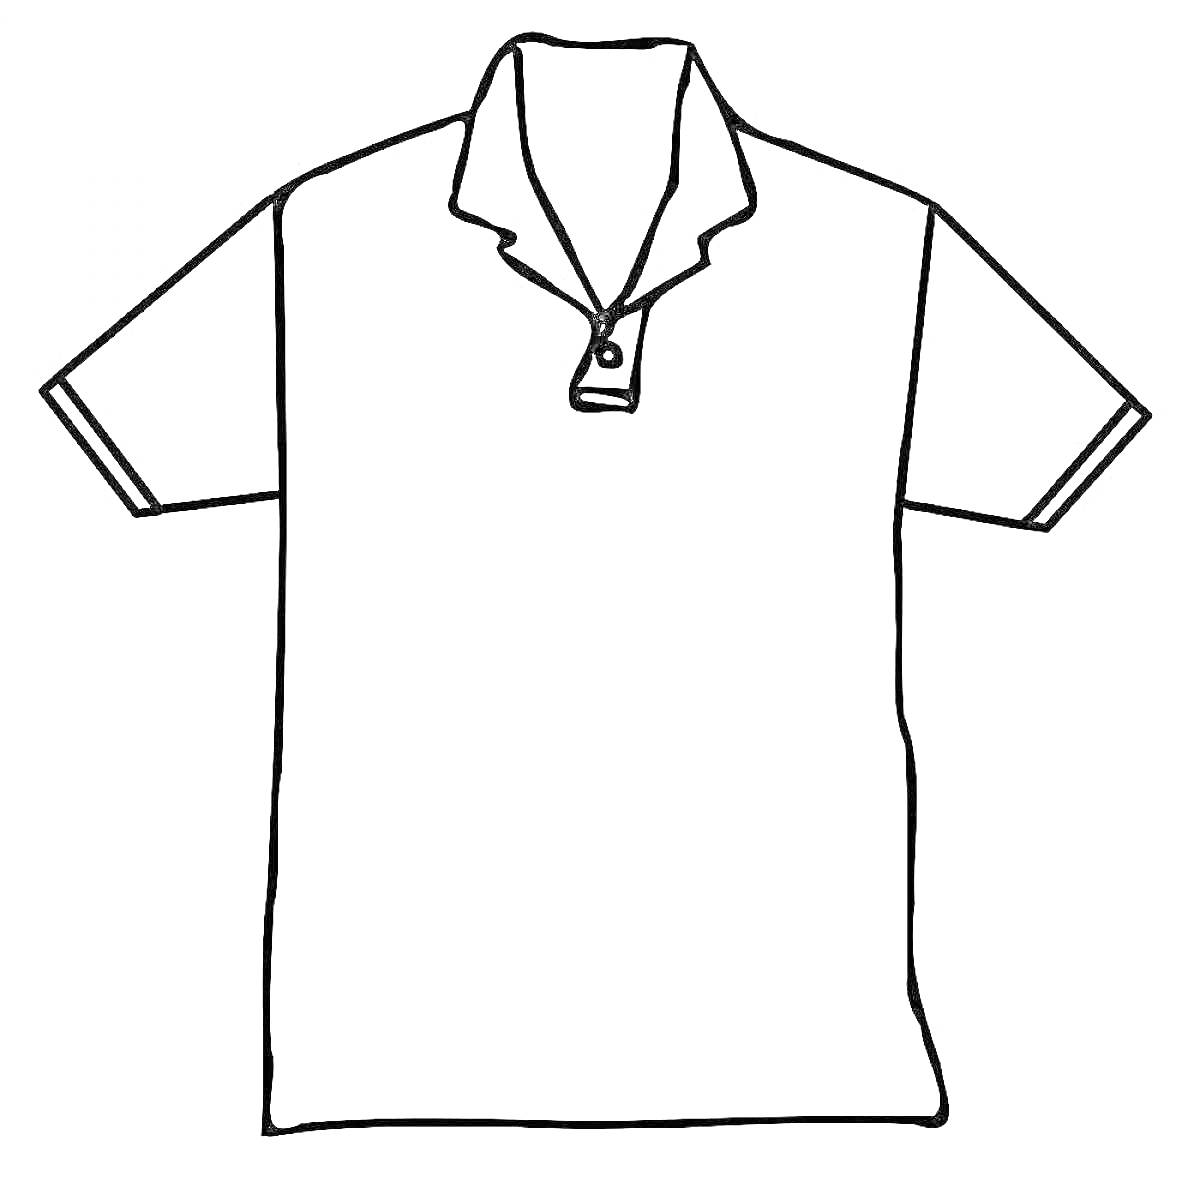 На раскраске изображено: Одежда, Короткие рукава, Воротник, Пуговицы, Рубашки